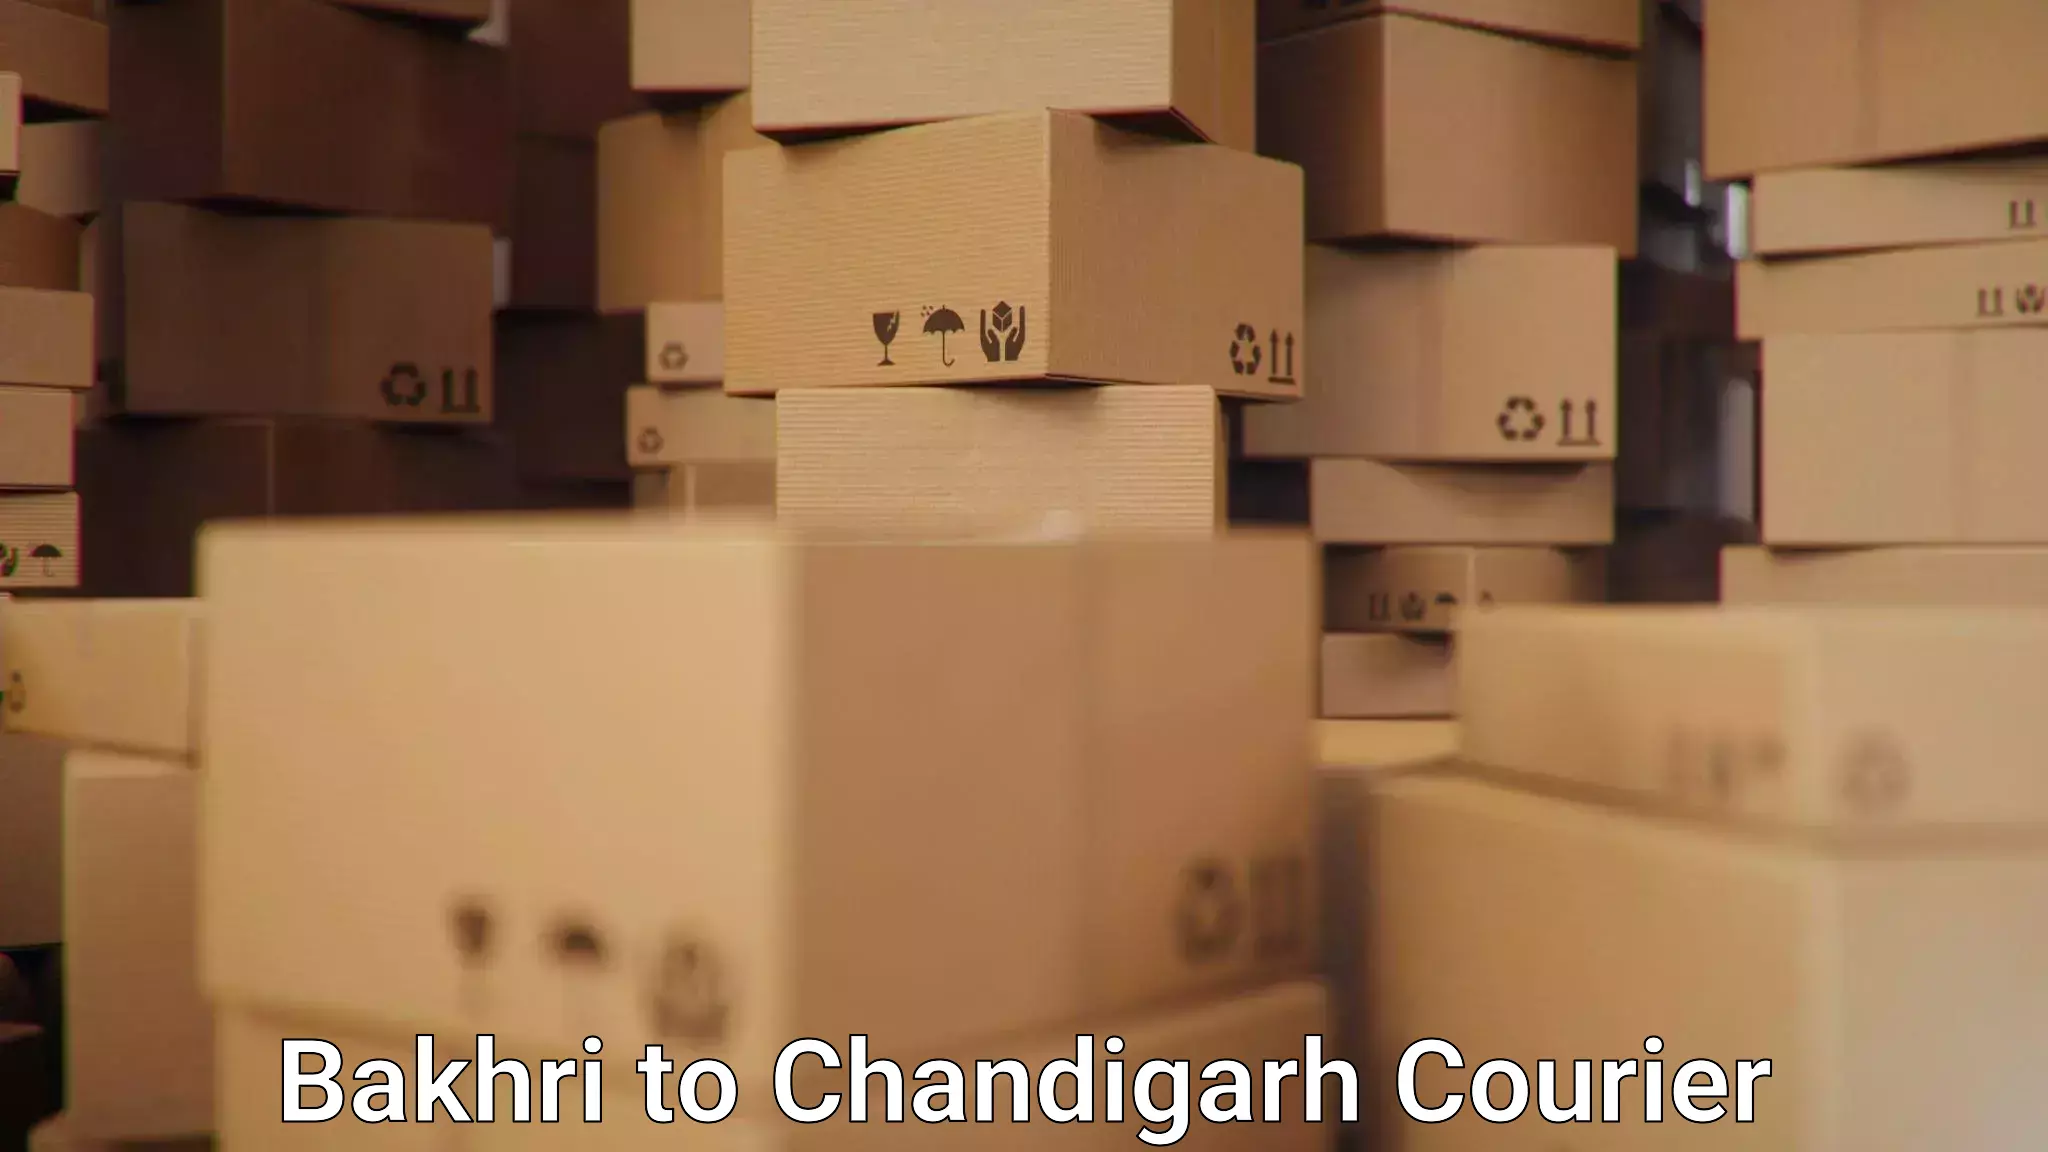 Professional courier handling Bakhri to Chandigarh